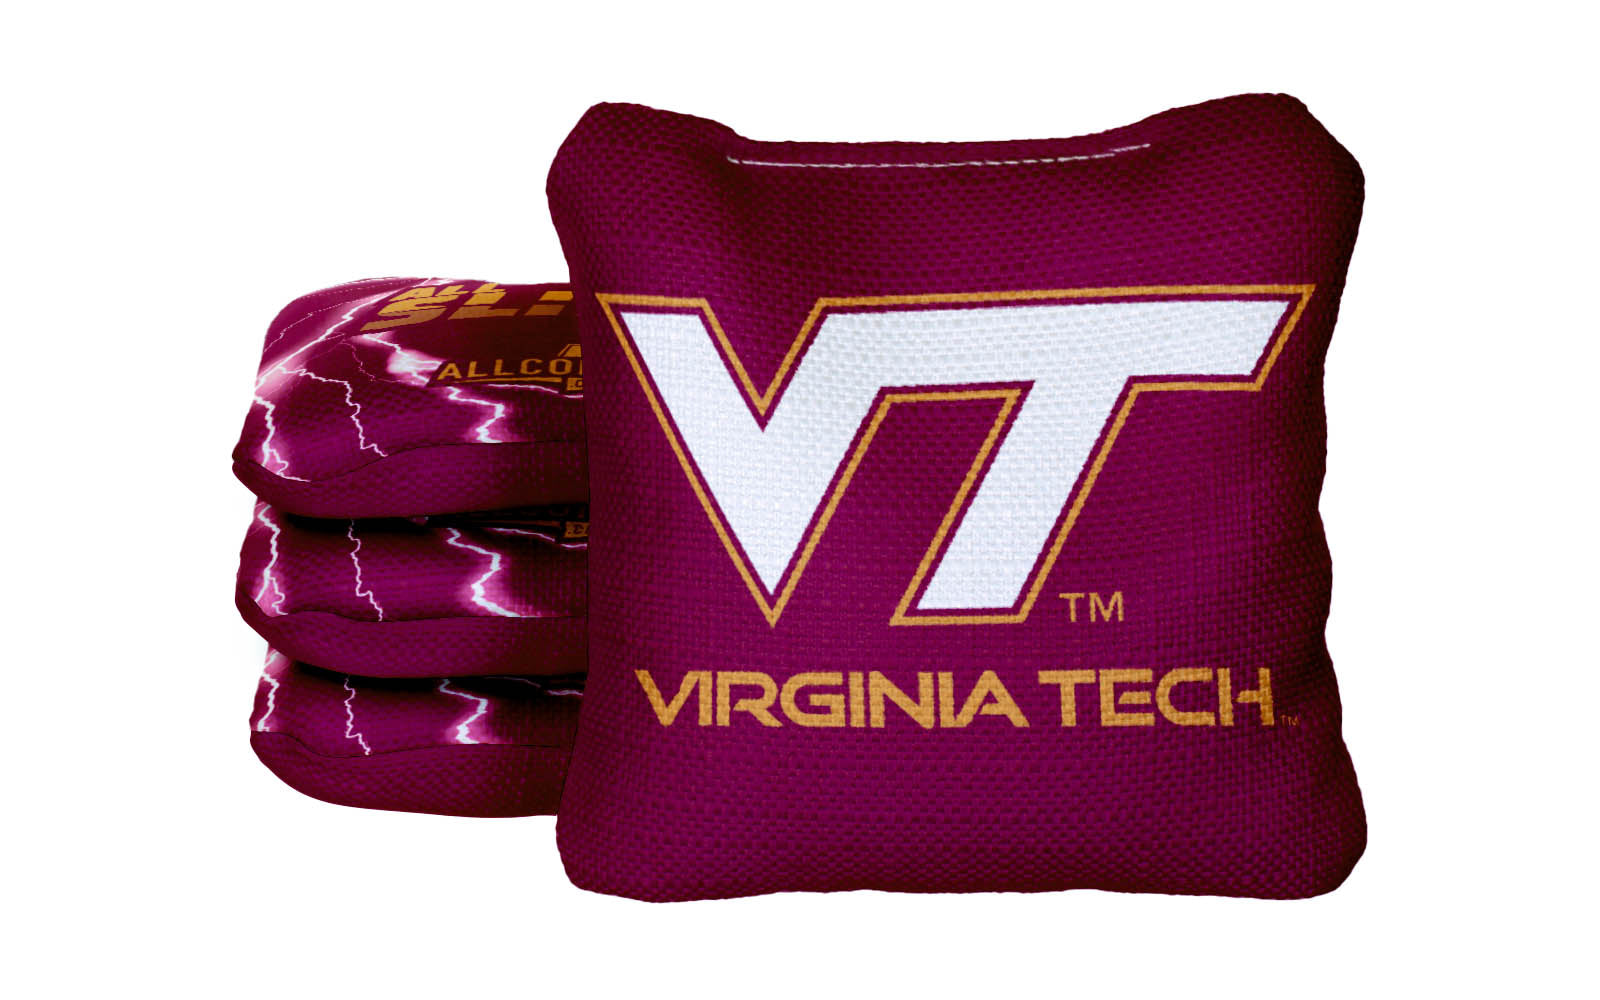 Officially Licensed Collegiate Cornhole Bags - AllCornhole All-Slide 2.0 - Set of 4 - Virginia Tech